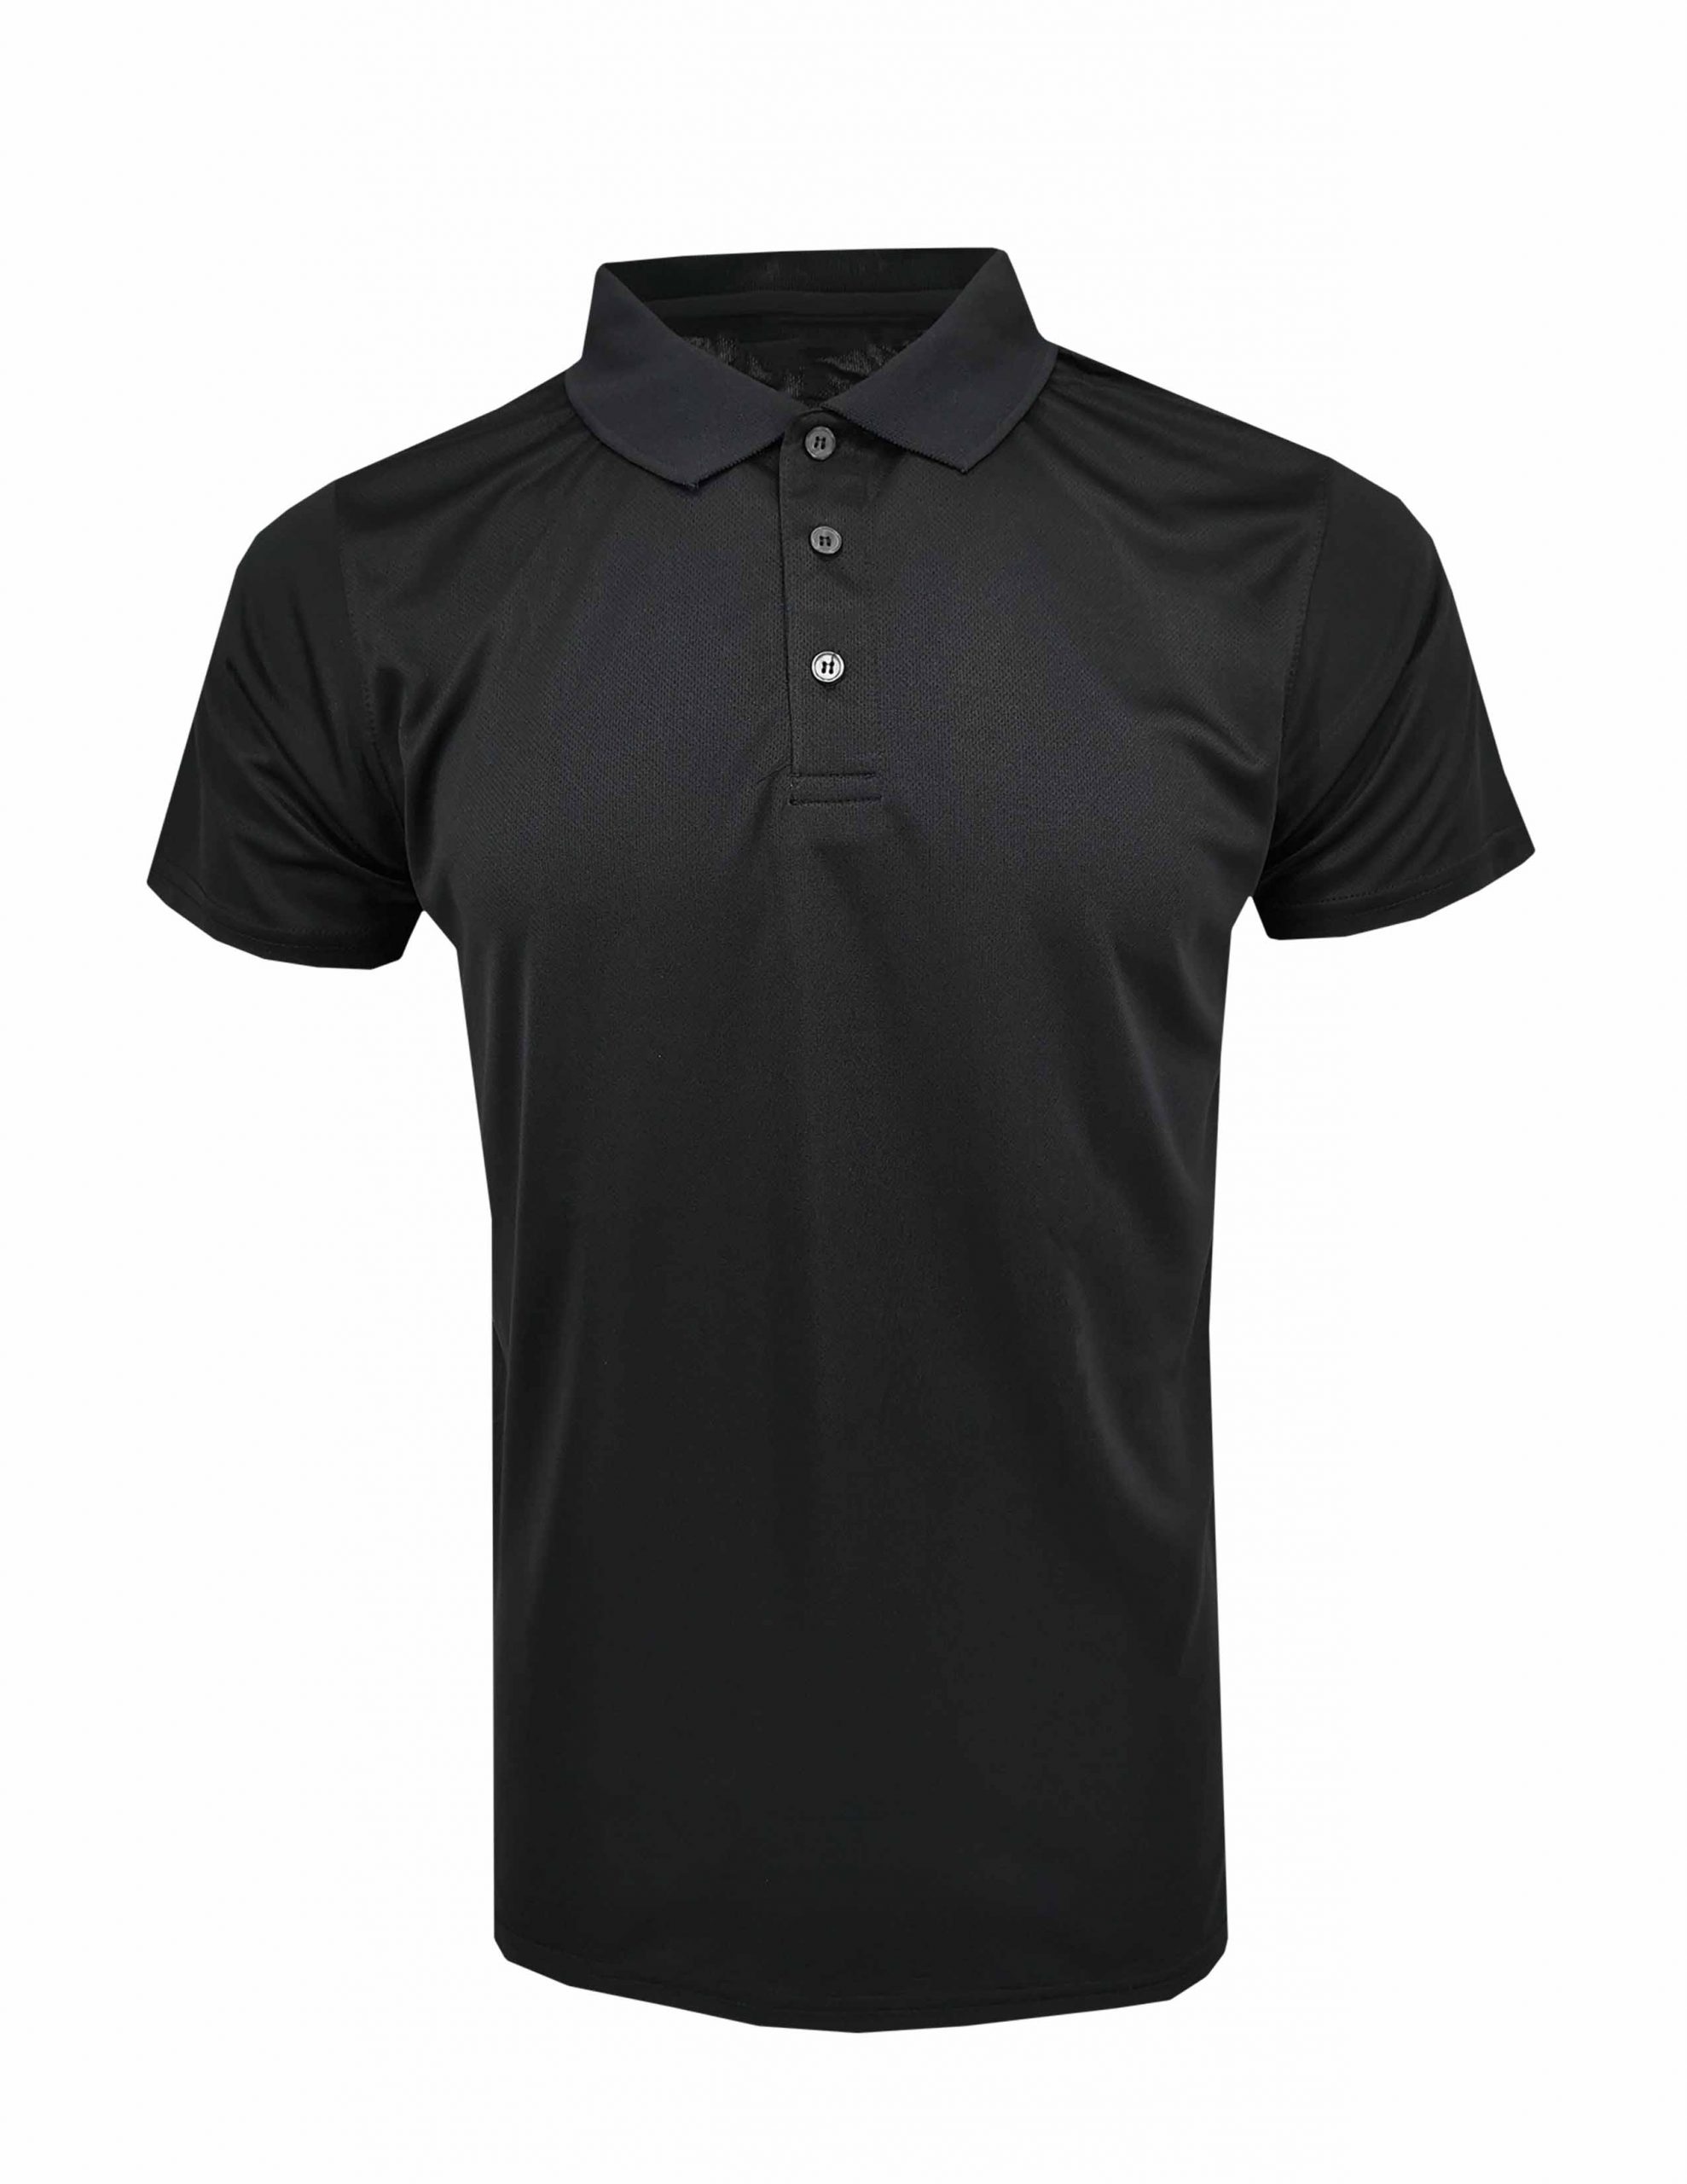 QDP 5310 Black - Rightway Basic T-Shirt | Basic T-Shirt Supplier ...